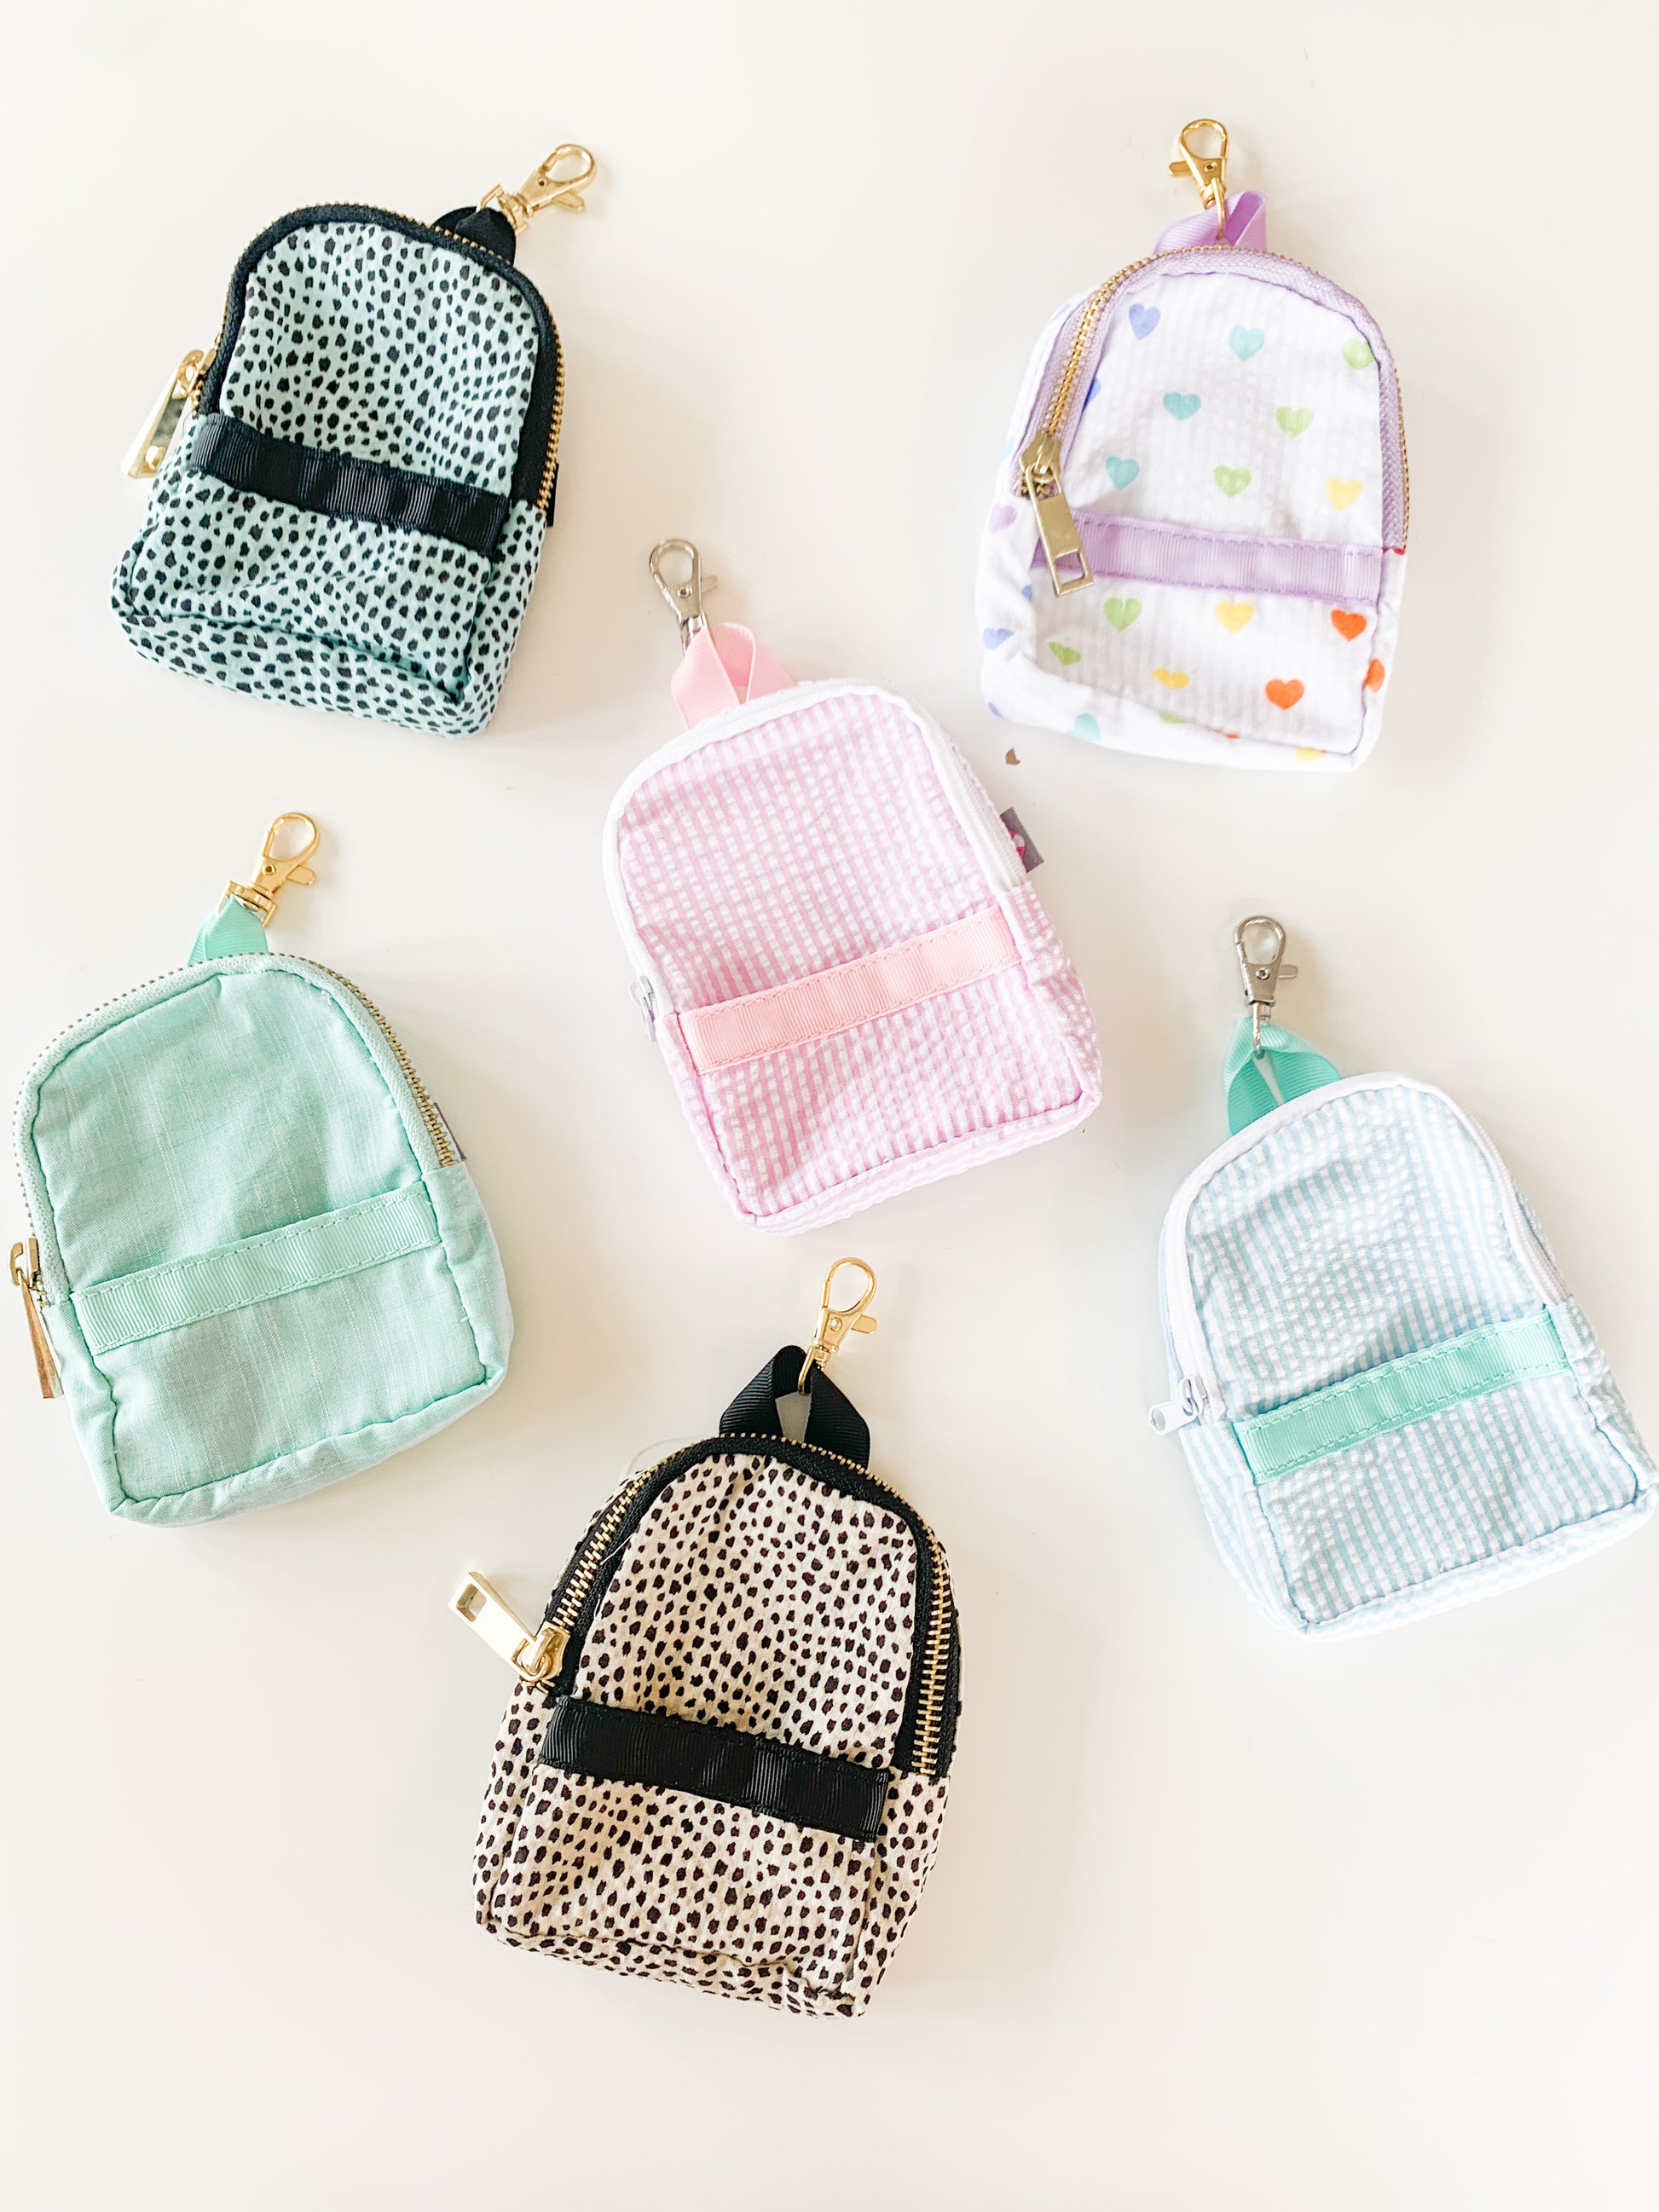 6 DIY miniature mini bags - backpack, handbag, trolley bag, luggage 